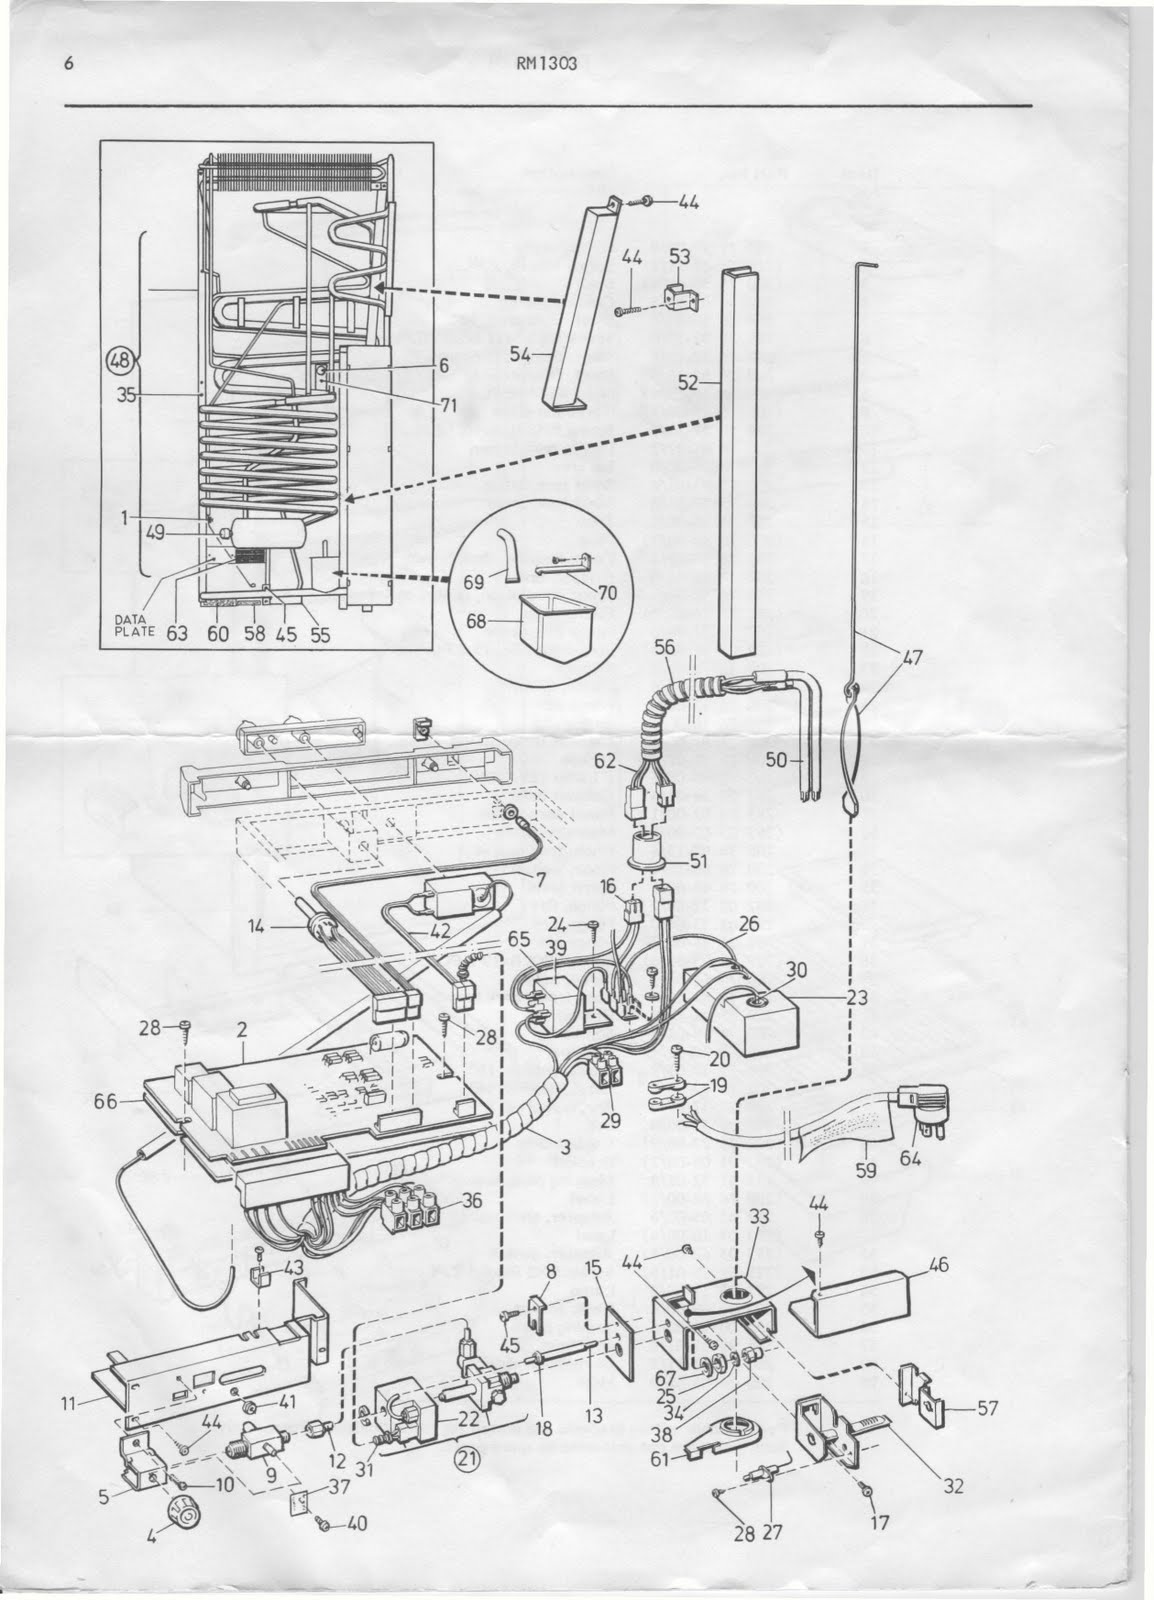 User Manual Pdf For Dometic Refridgerator Model Rm 2604